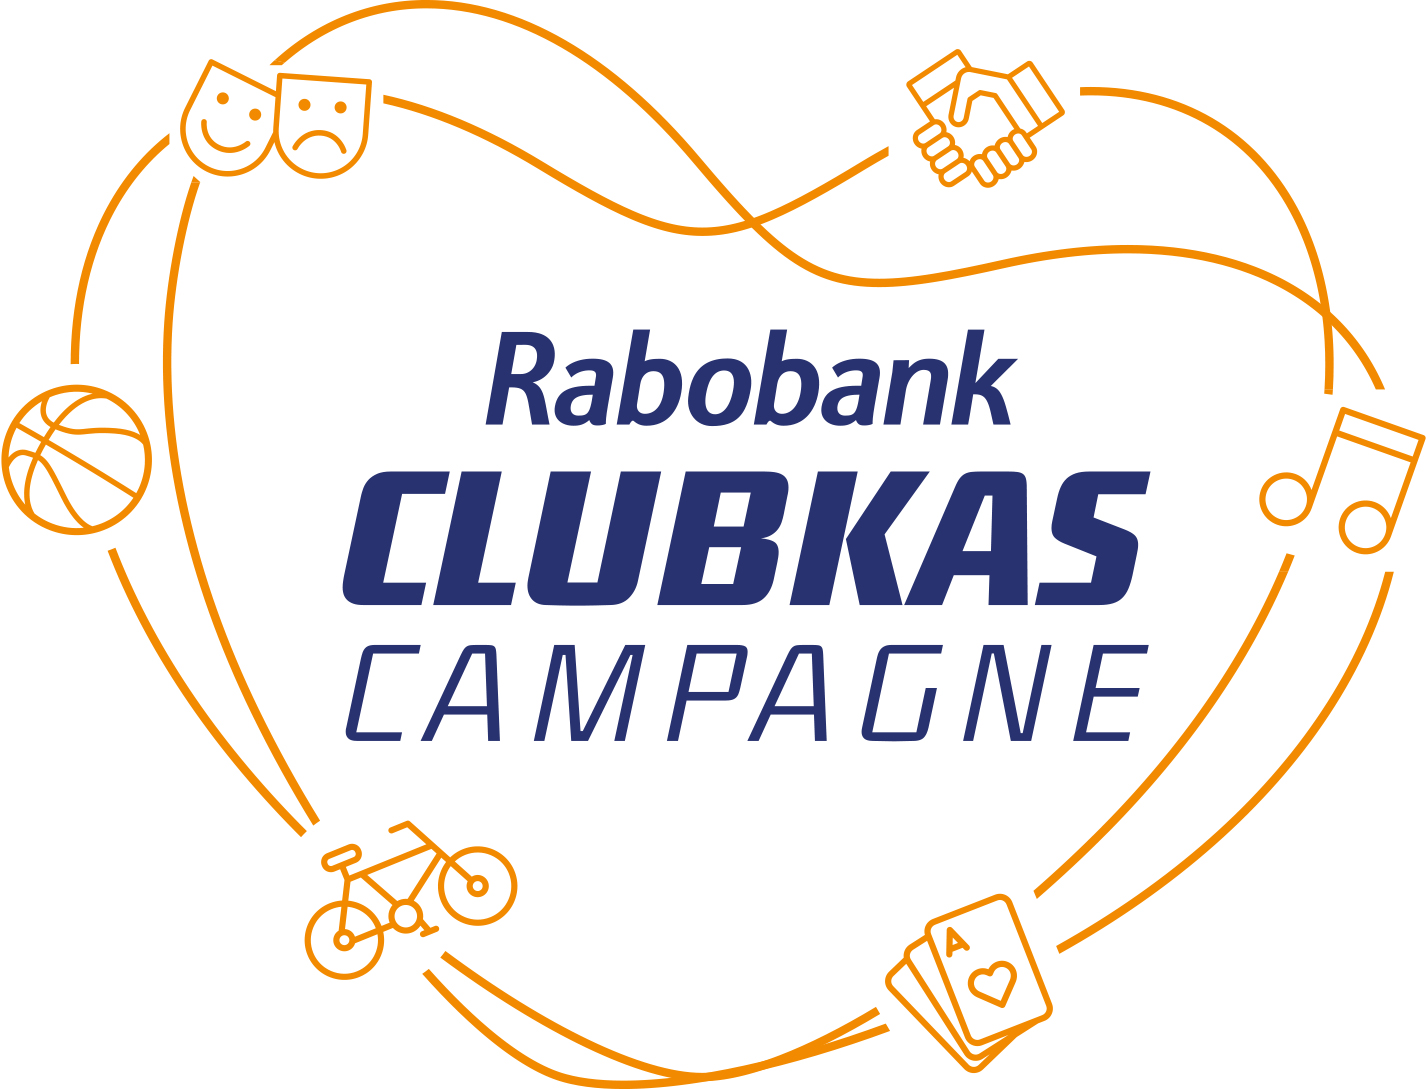 RaboClubkasCampagne